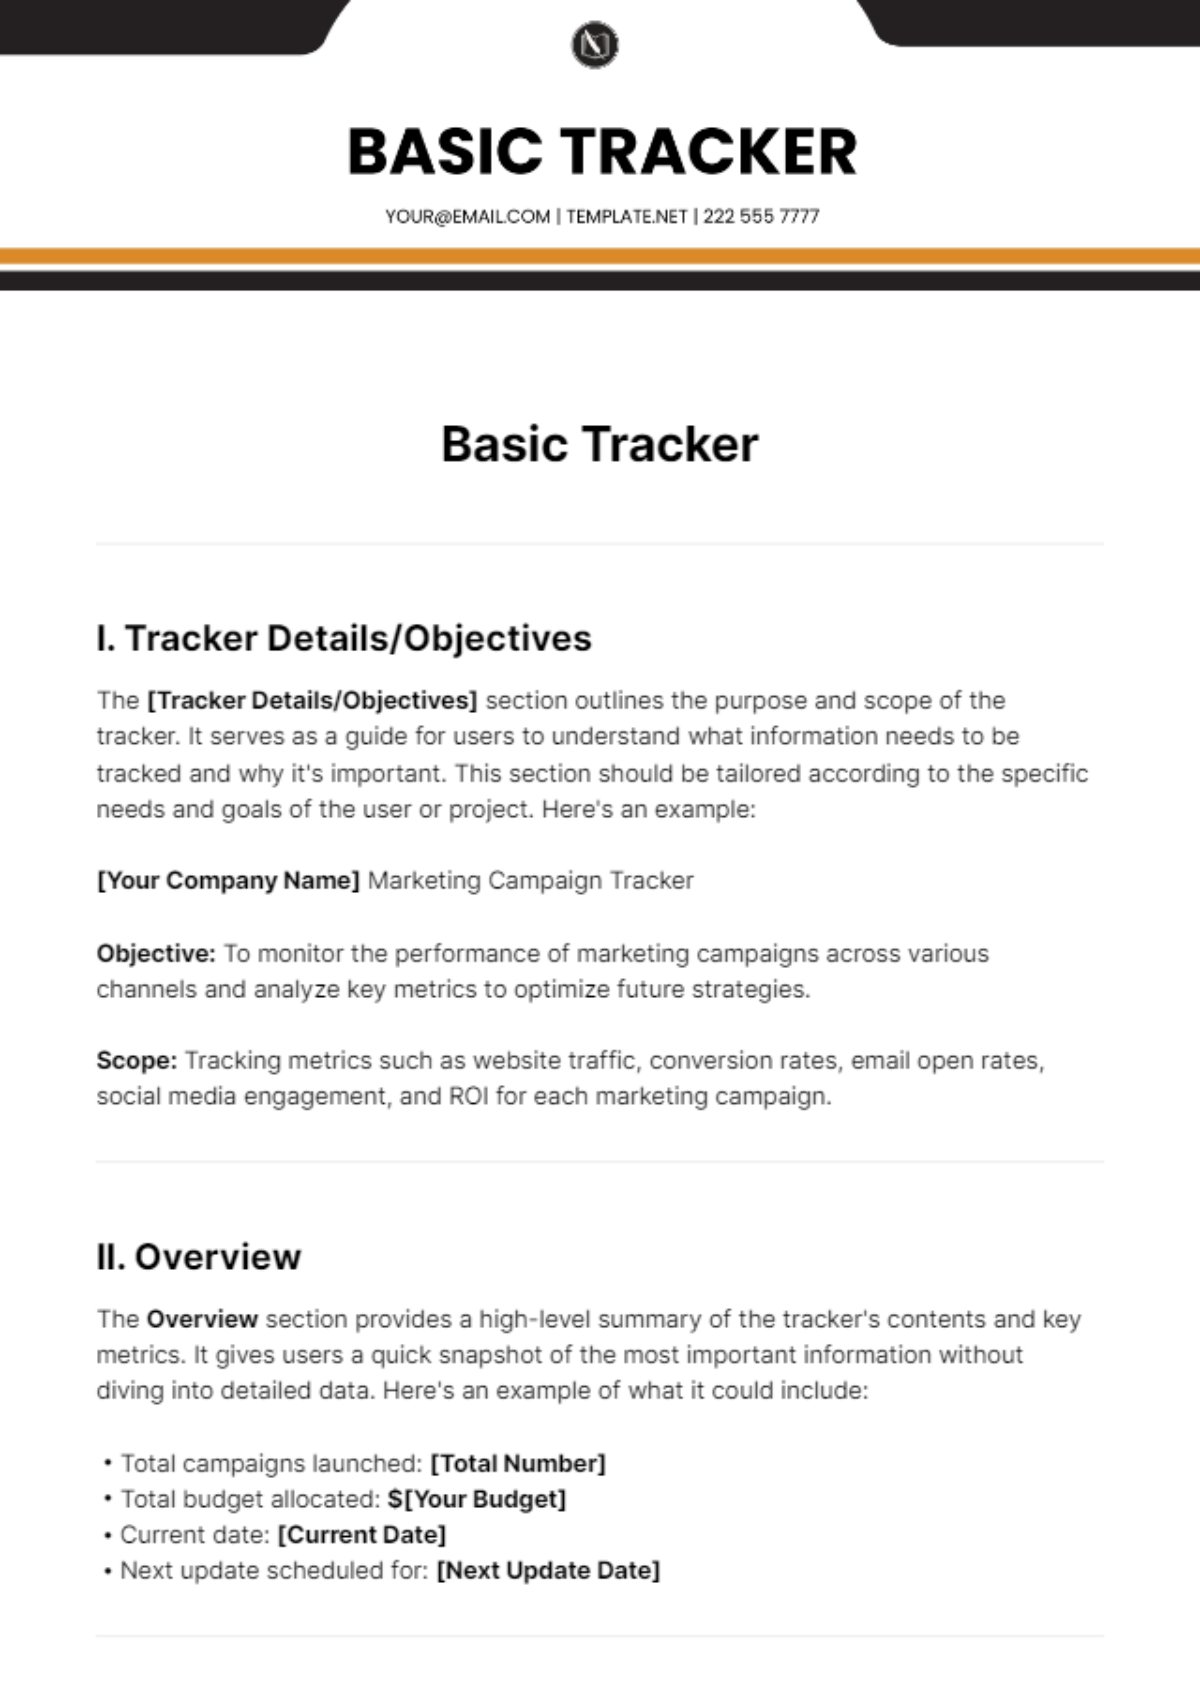 Basic Tracker Template